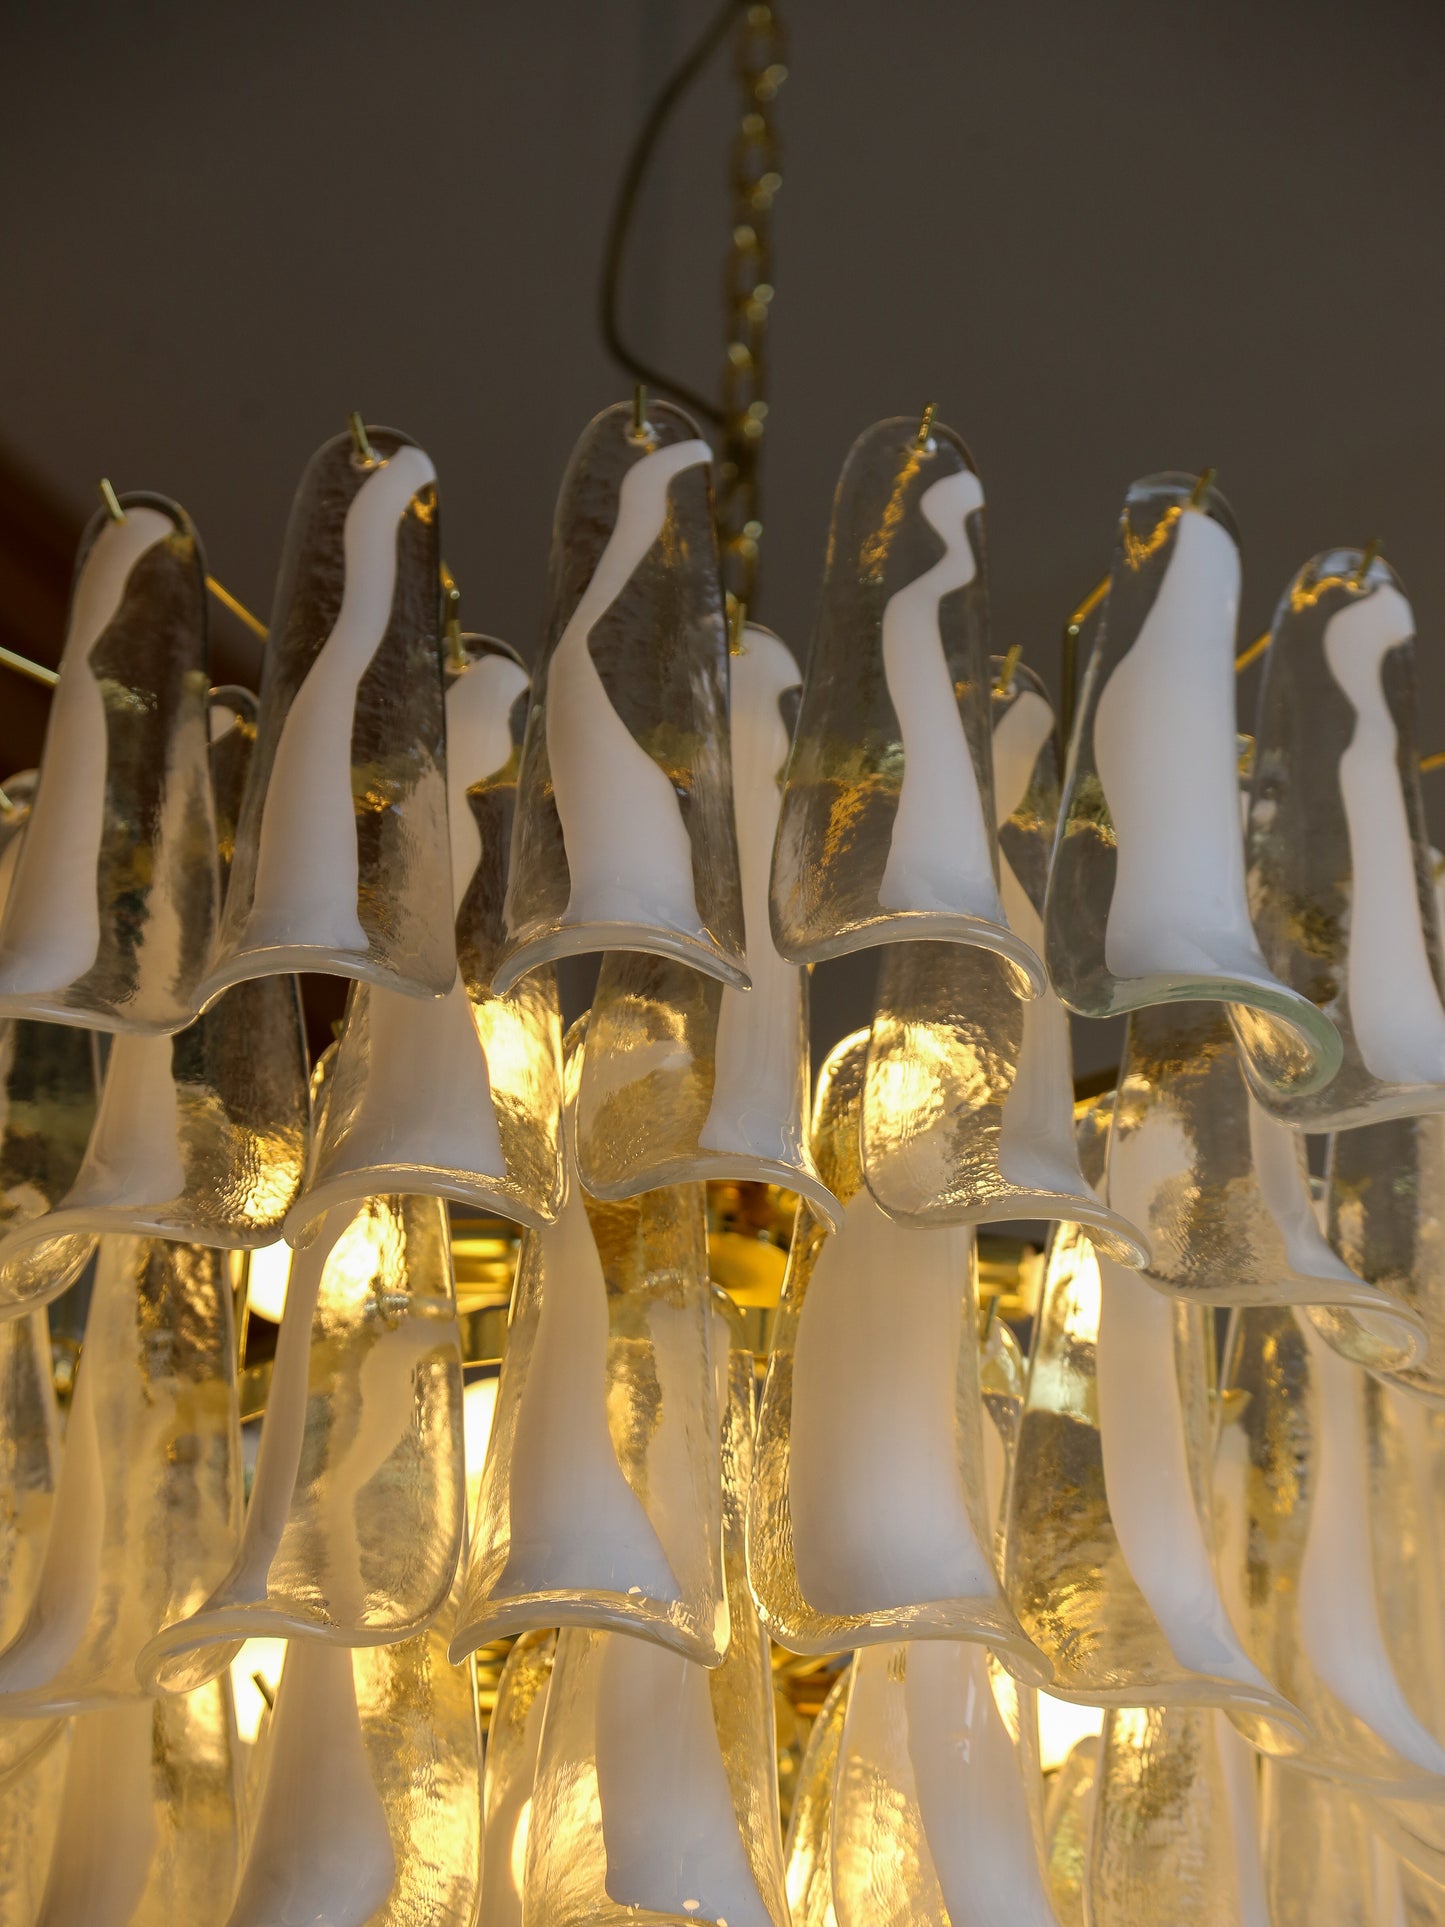 Italian White Murano Glass Chandelier by Lumini Collections